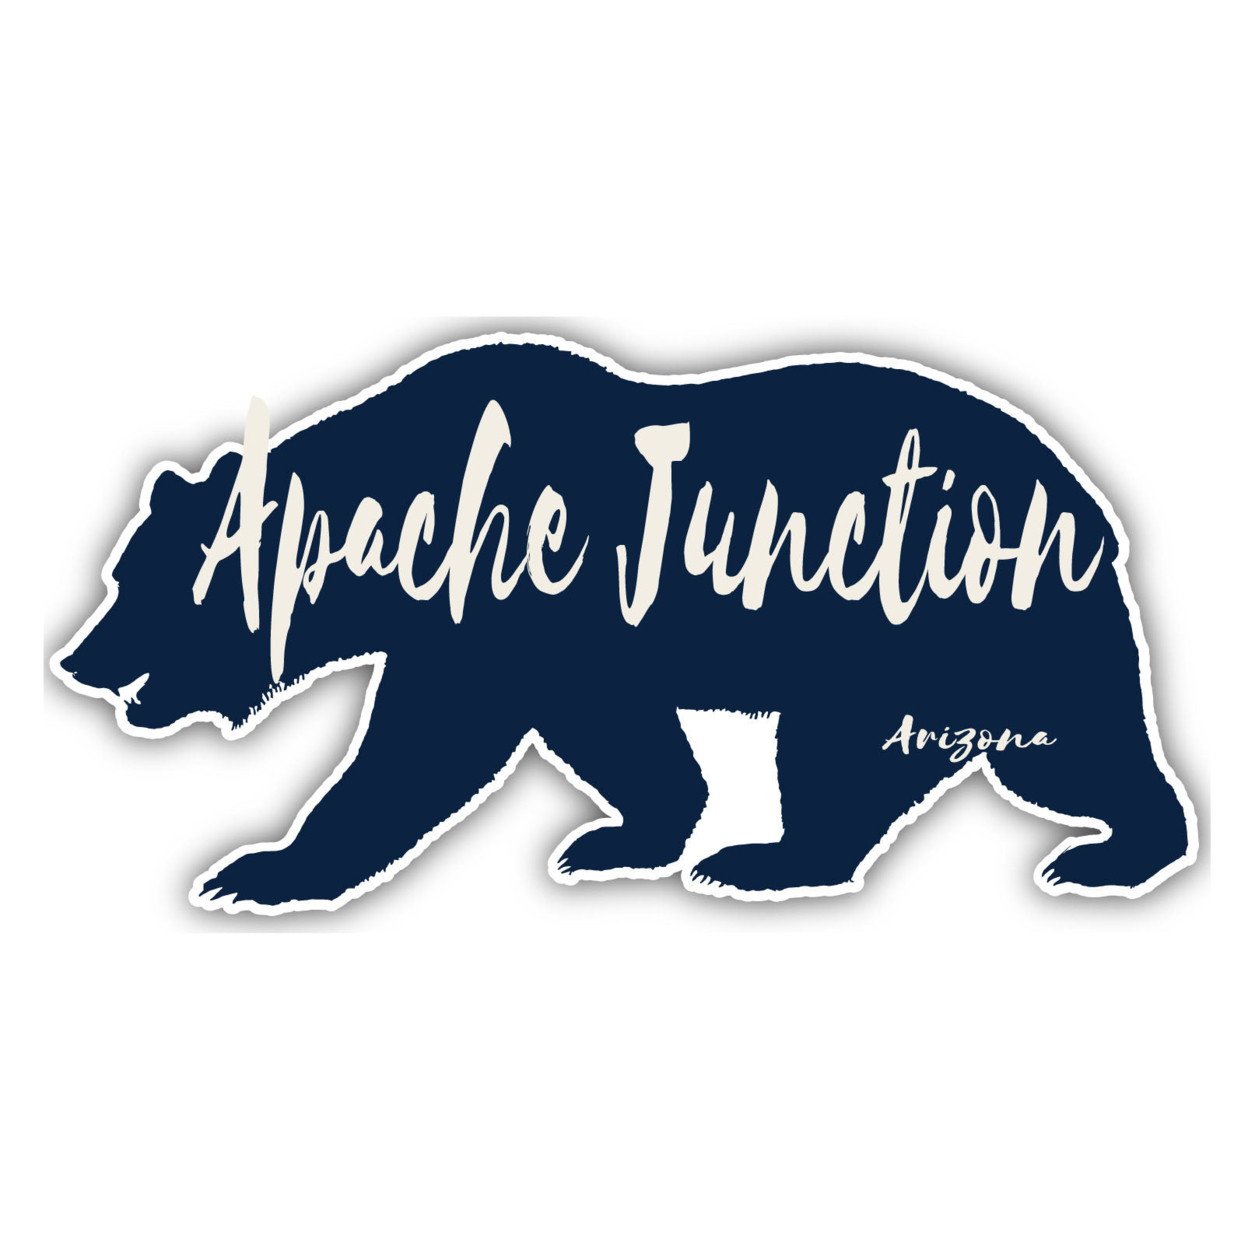 Apache Junction Arizona Souvenir Decorative Stickers (Choose Theme And Size) - 4-Pack, 6-Inch, Bear